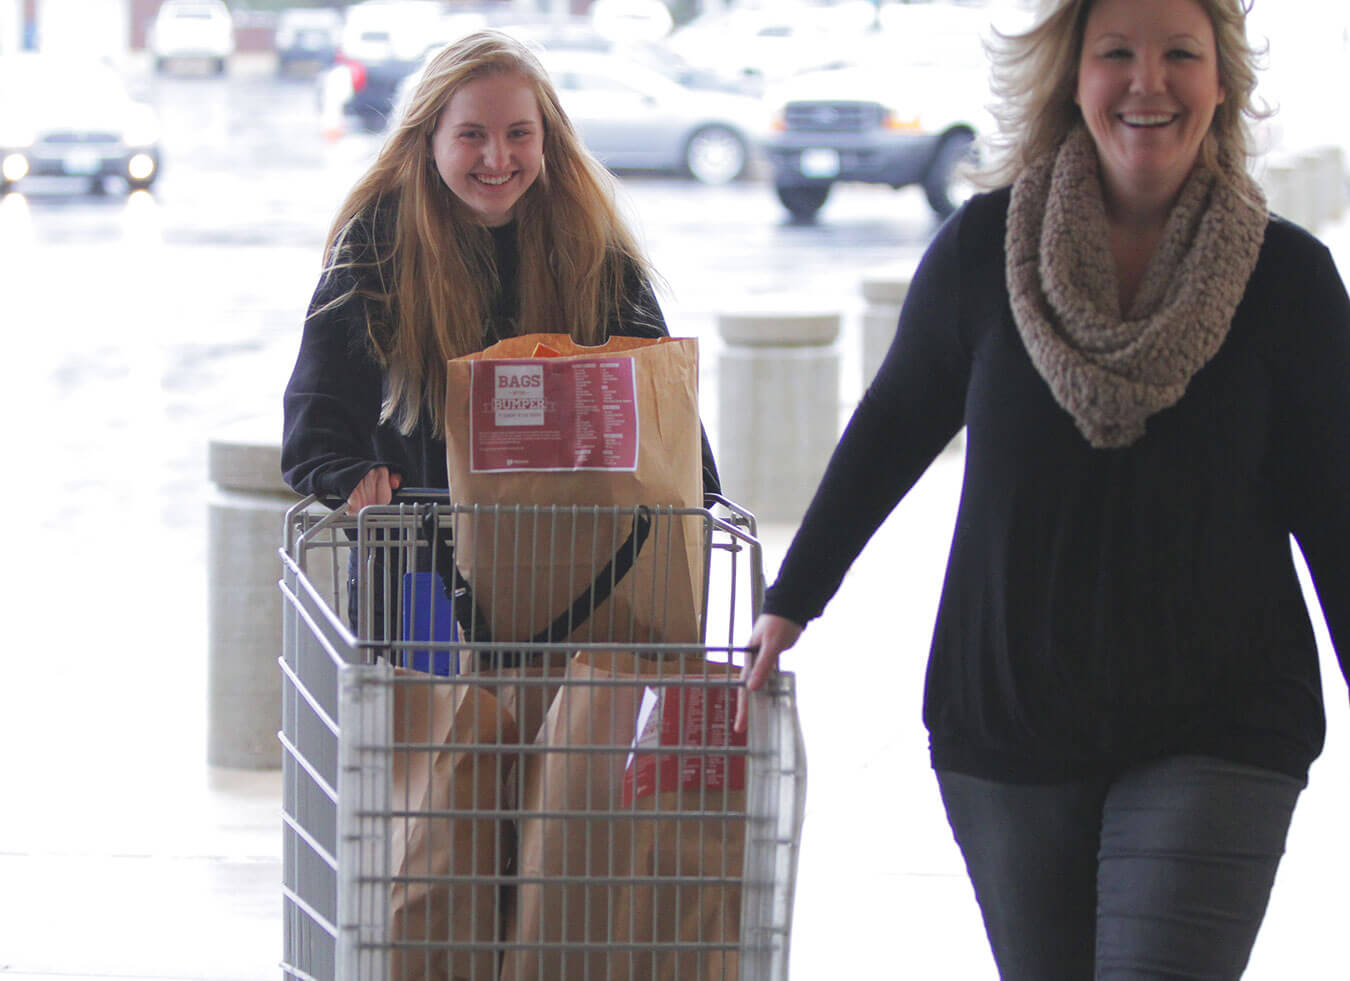 Shopping - Girls - Helping - Smile - Happy - Cart - Food - Goods